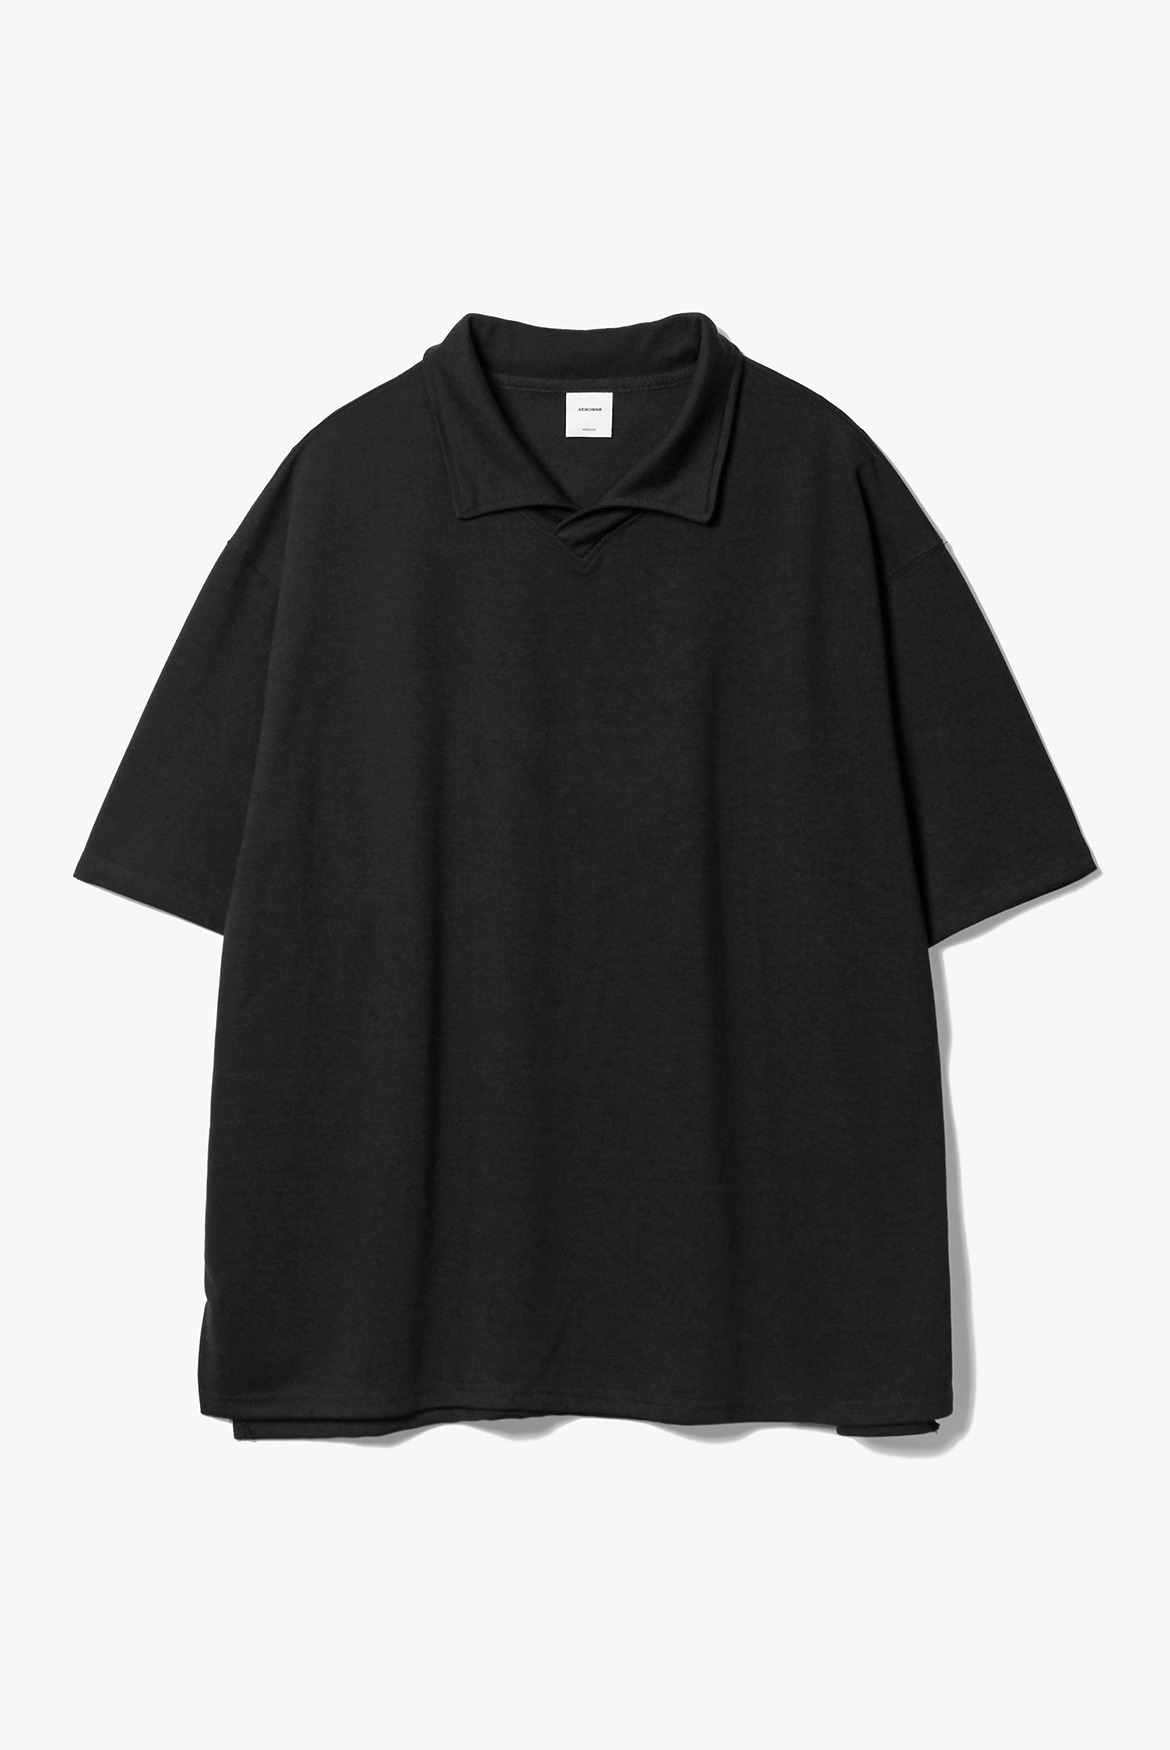 V-Neck Stand Collar T-Shirts [Black]